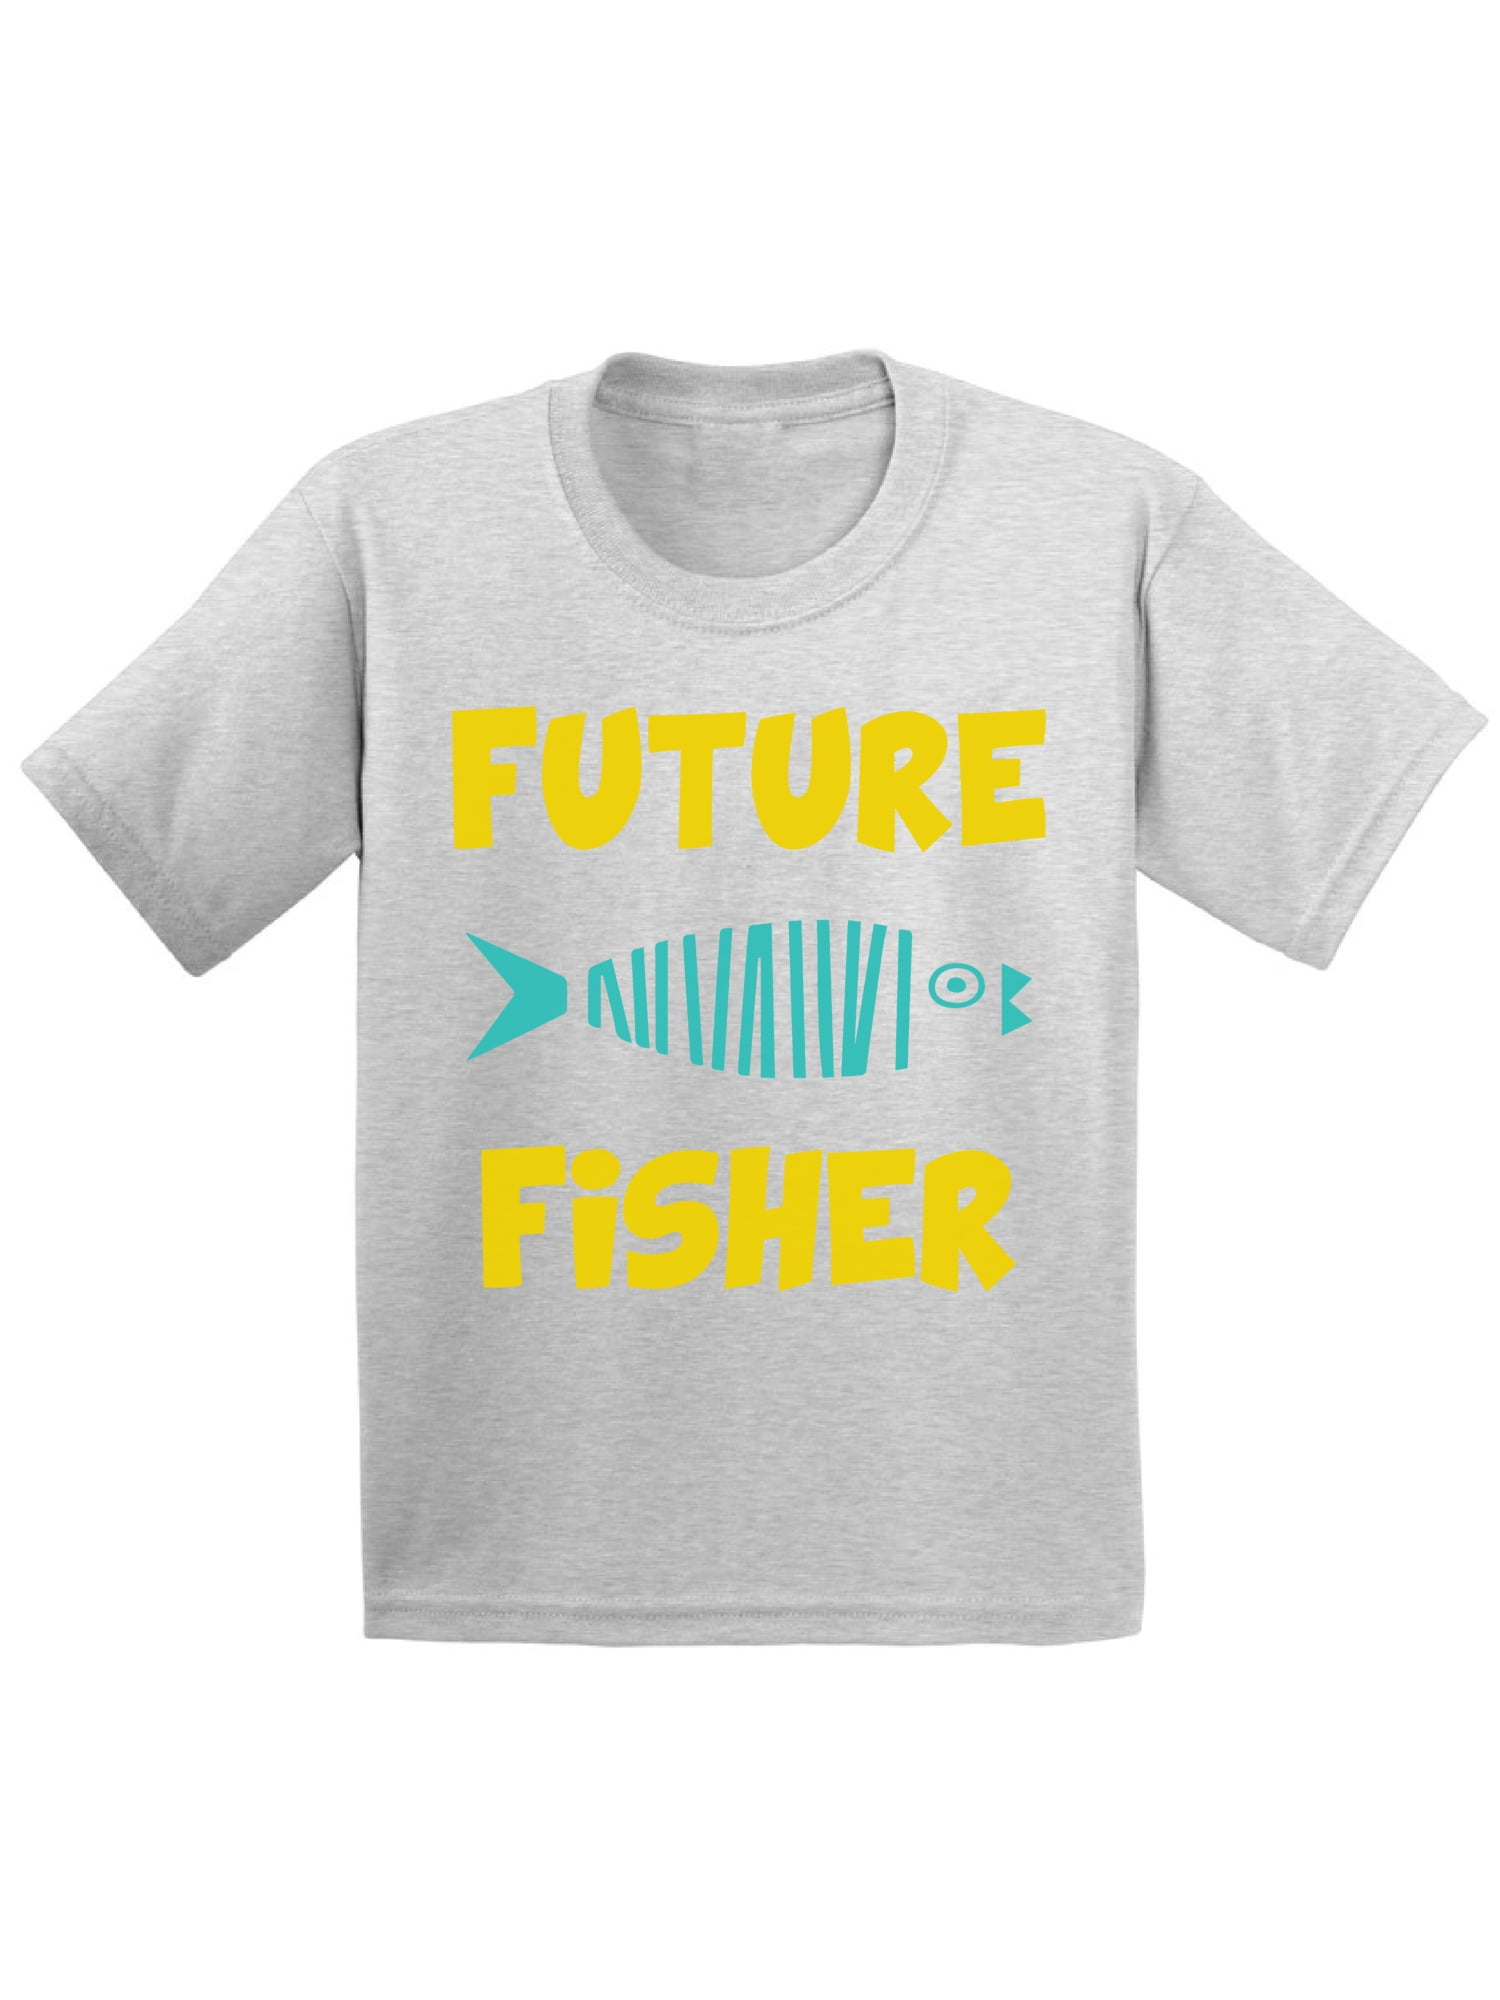 Kids Fishing Clothing Novelty More